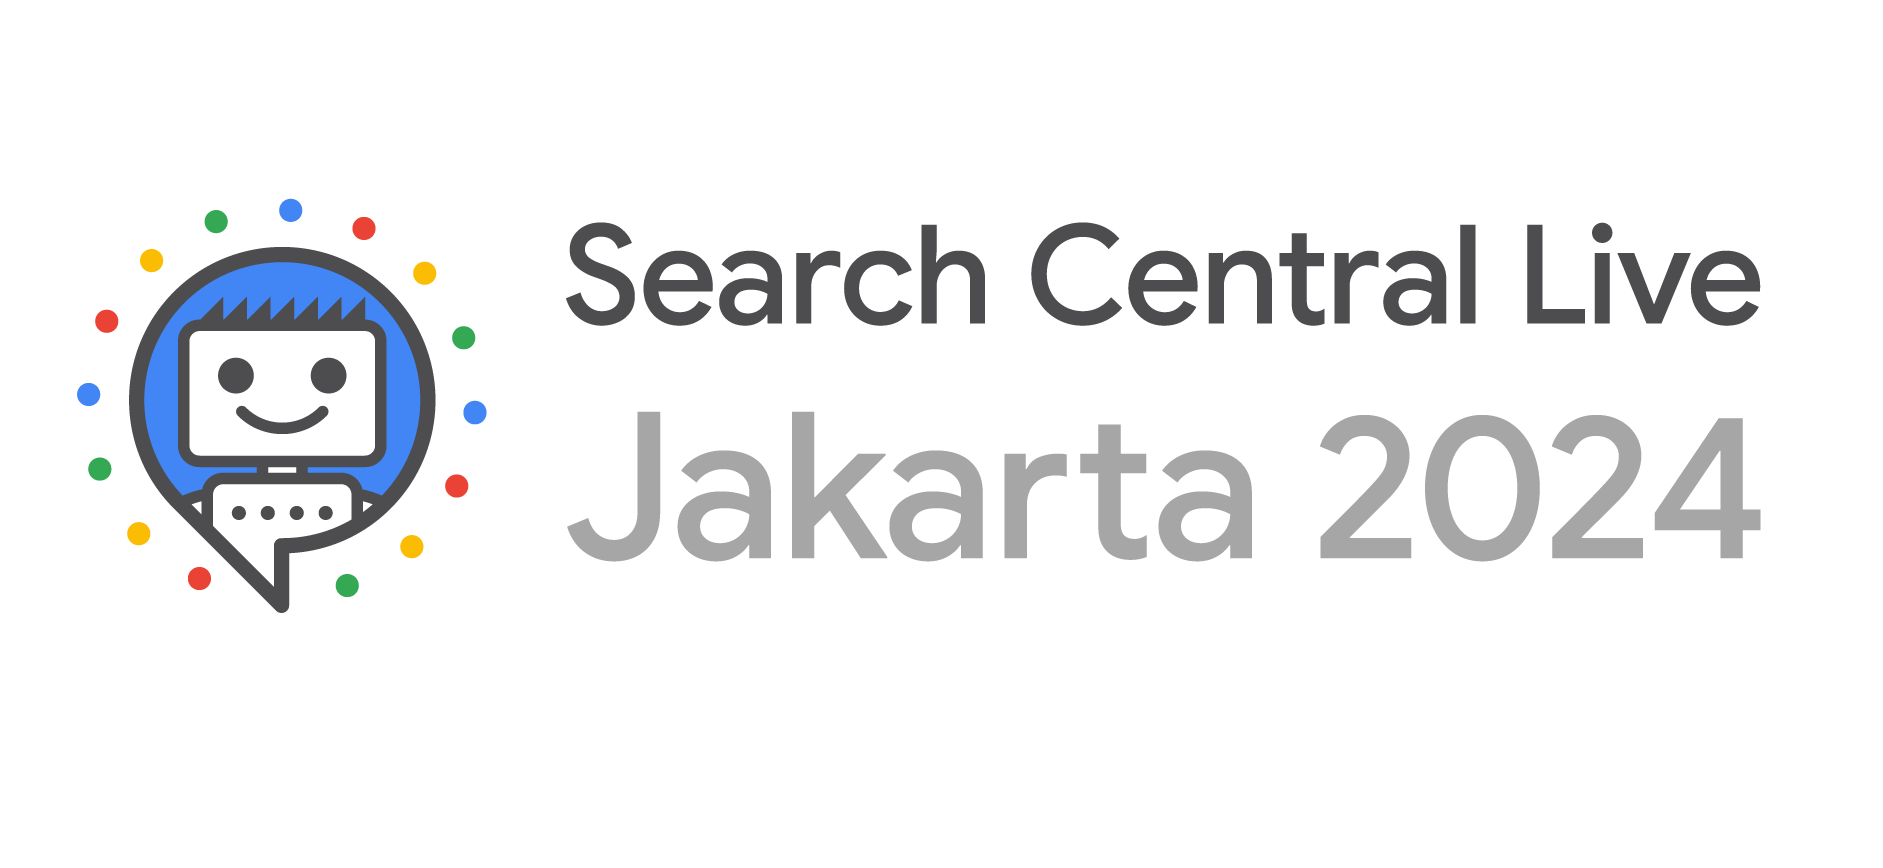 Search Central Live Dżakarta 2024